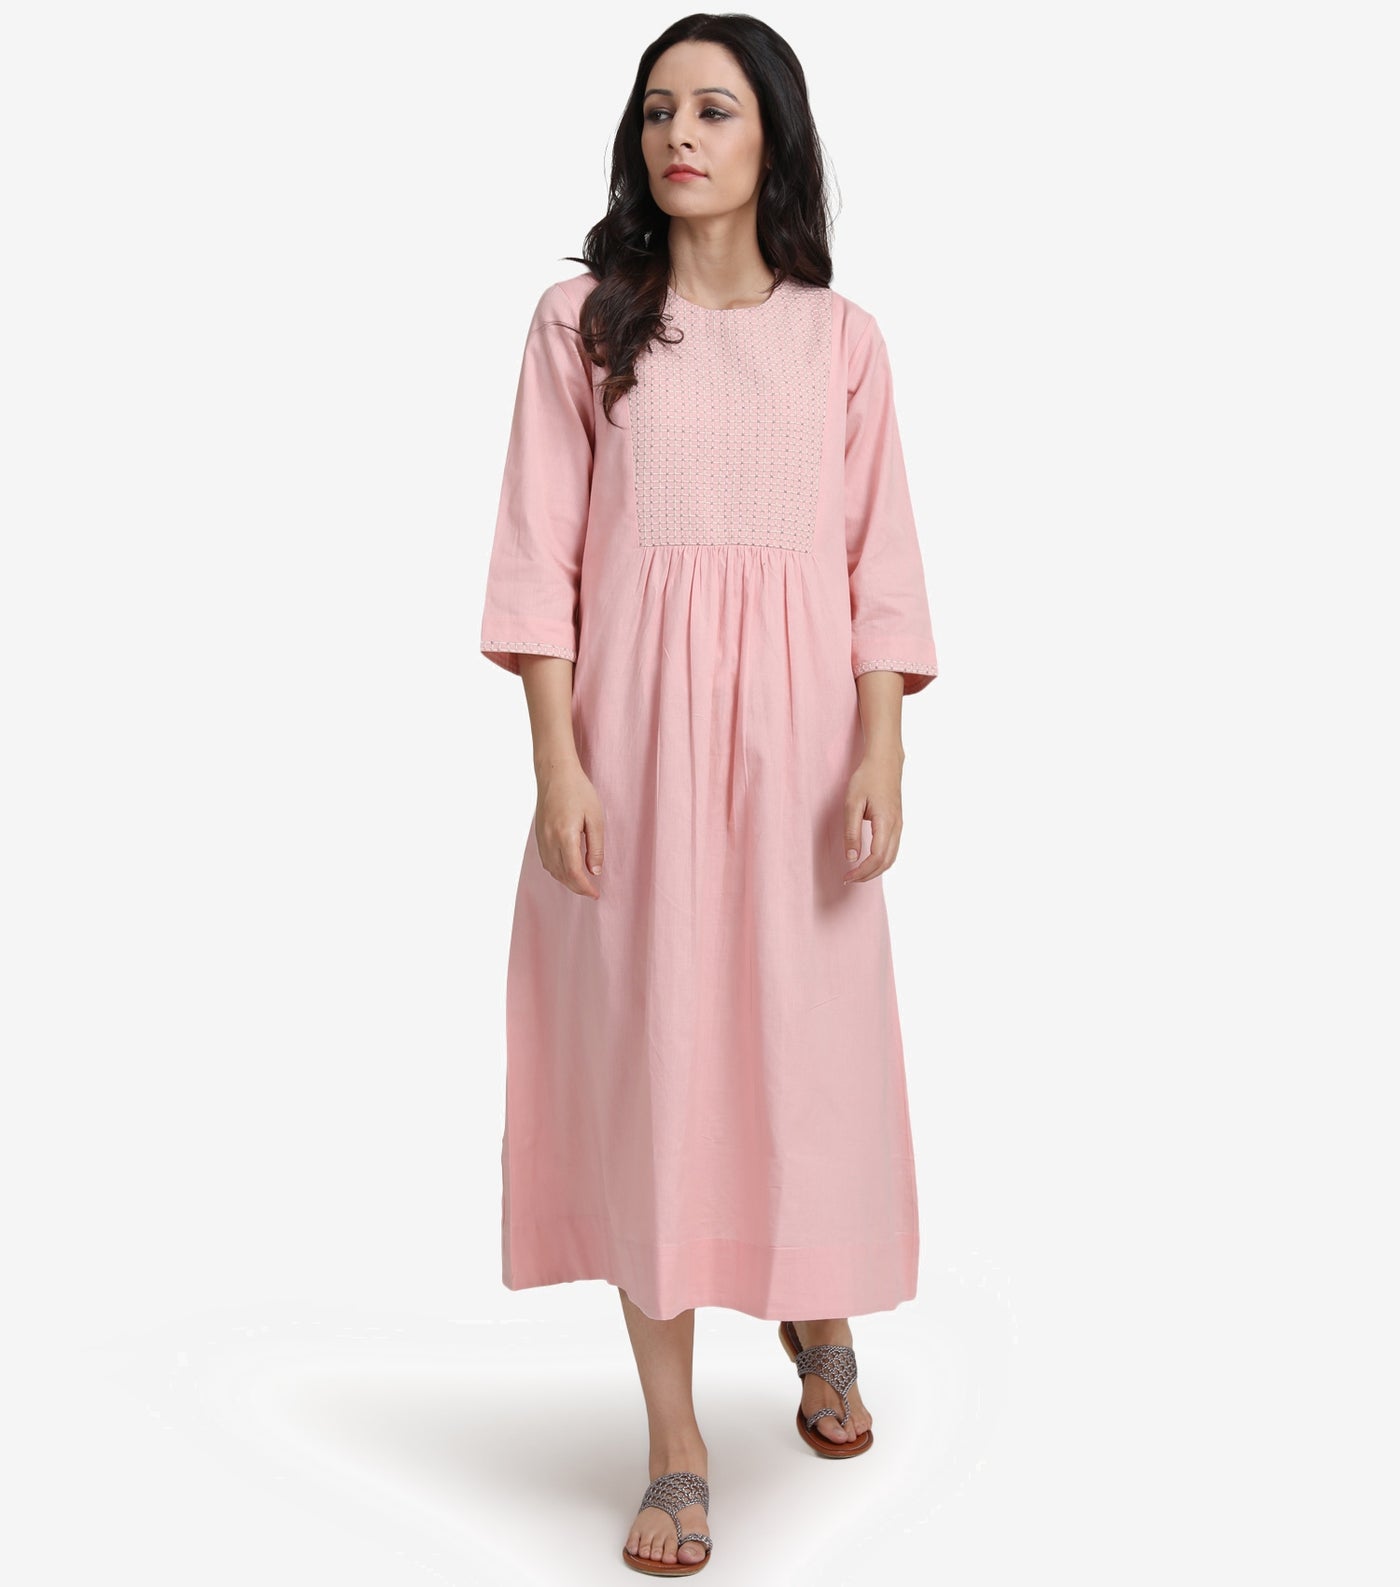 Pastel pink cotton linen Dress